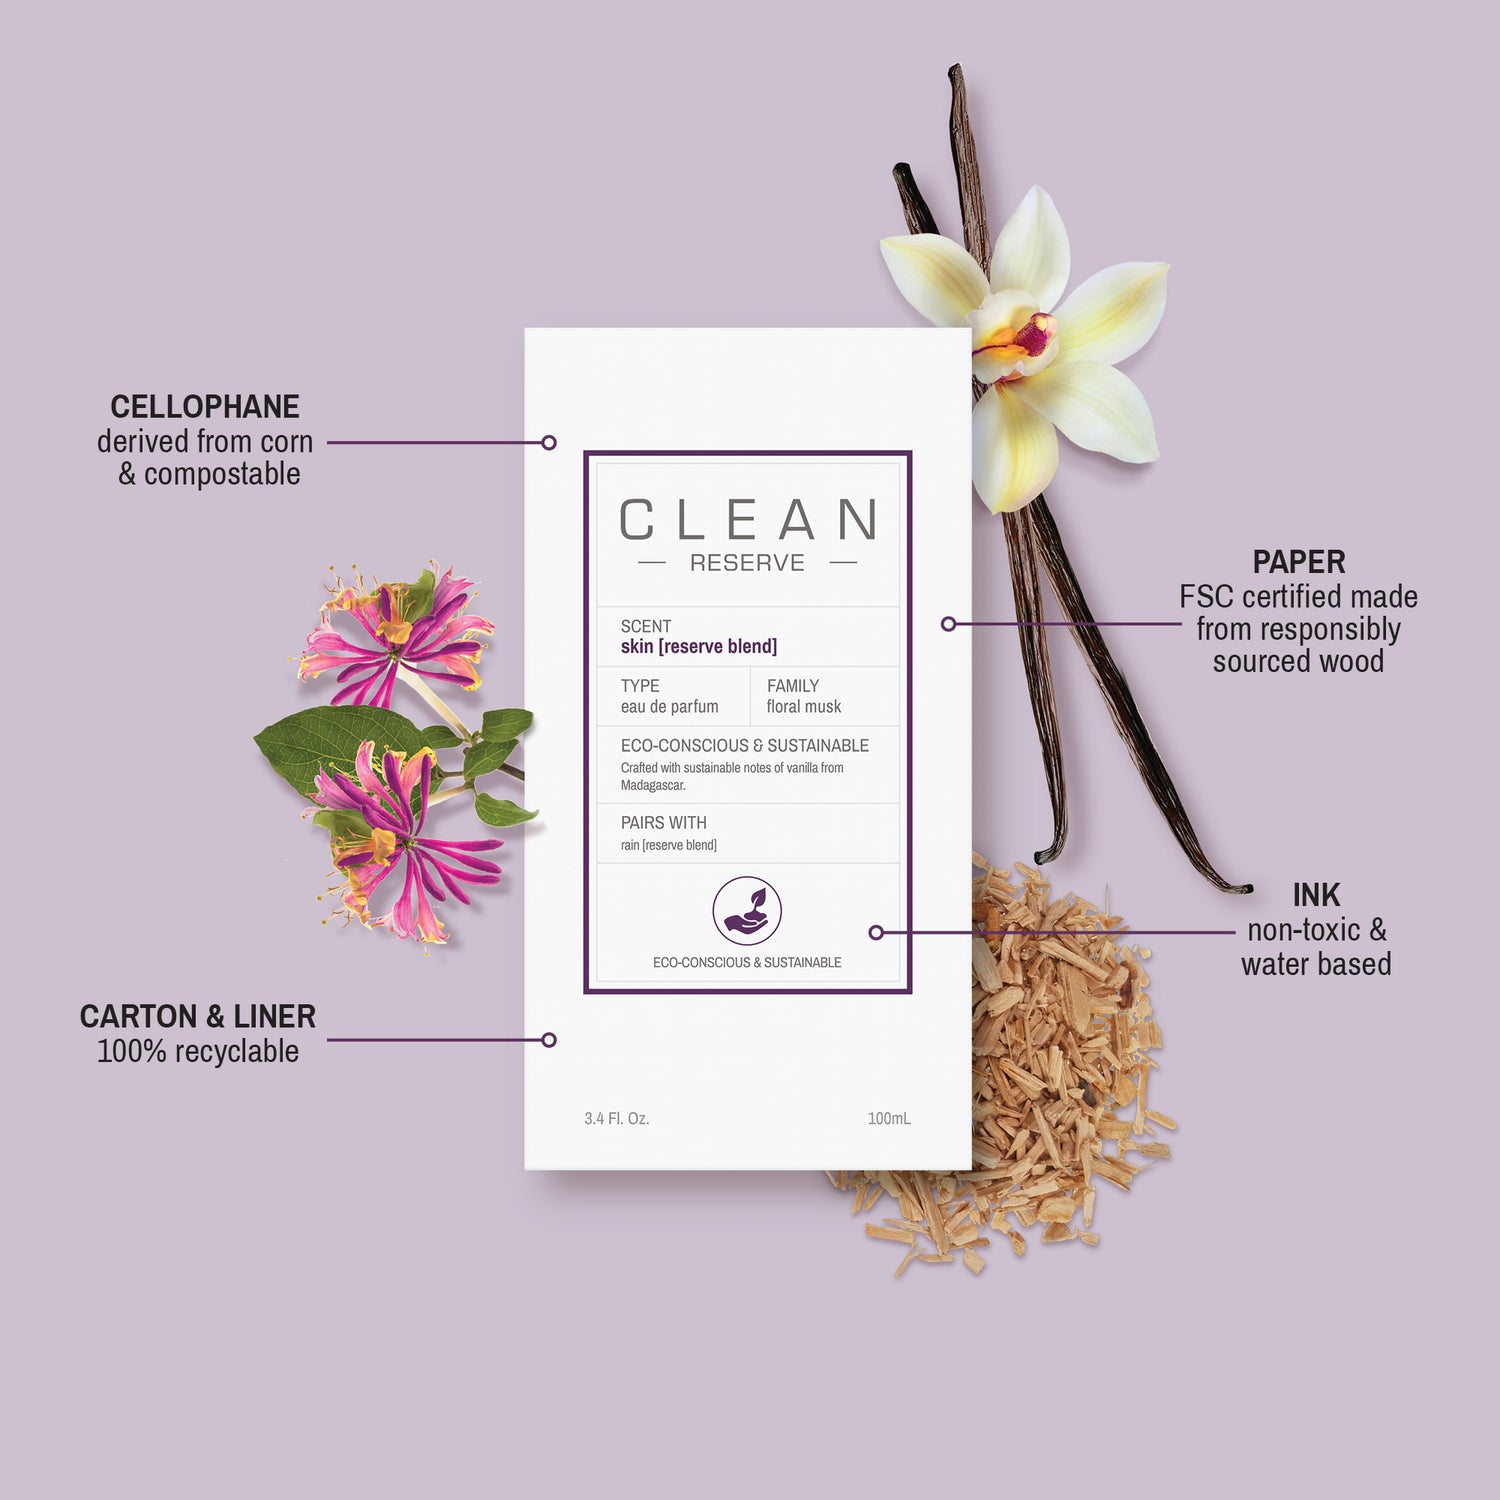 CLean Reserve Skin Carton